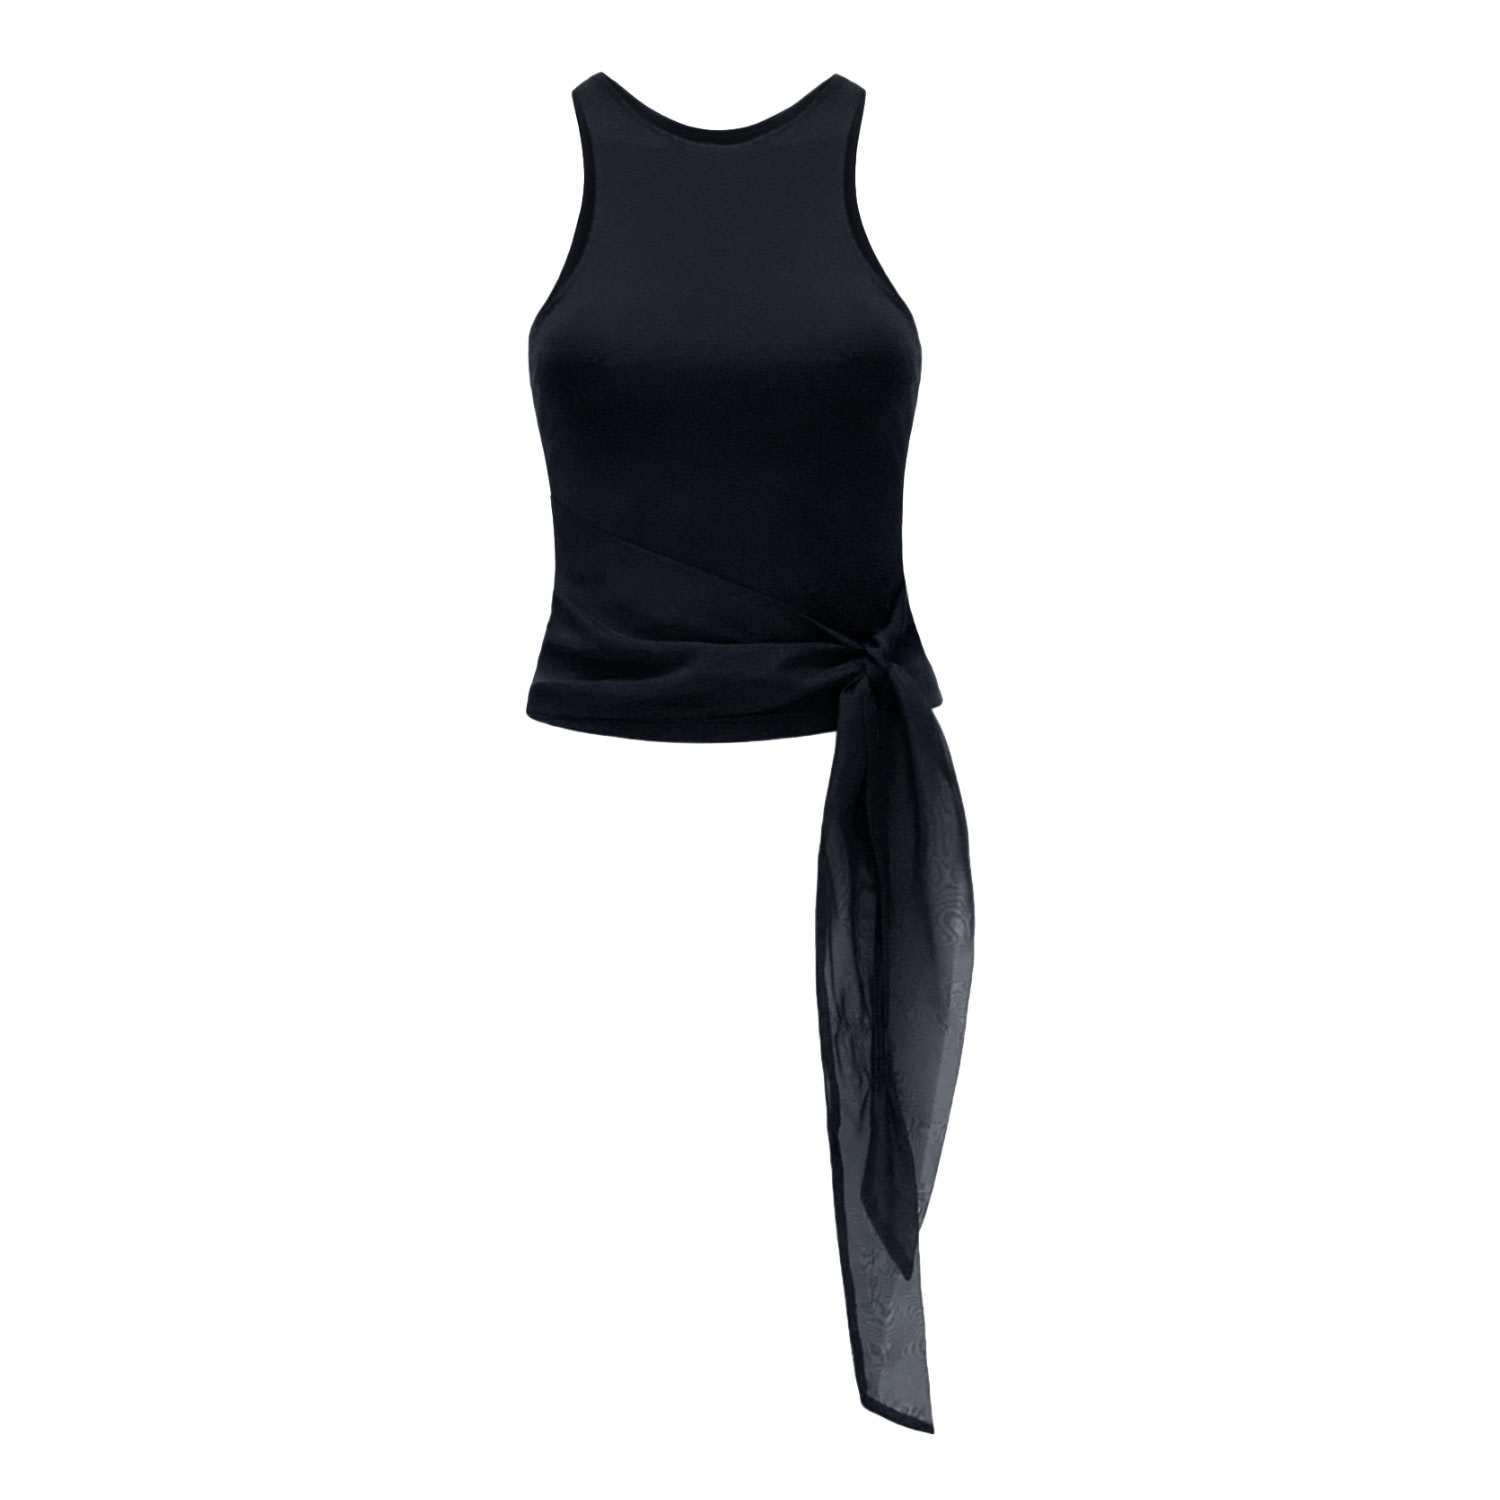 Shop Ow Collection Women's Lana Tie Black Top